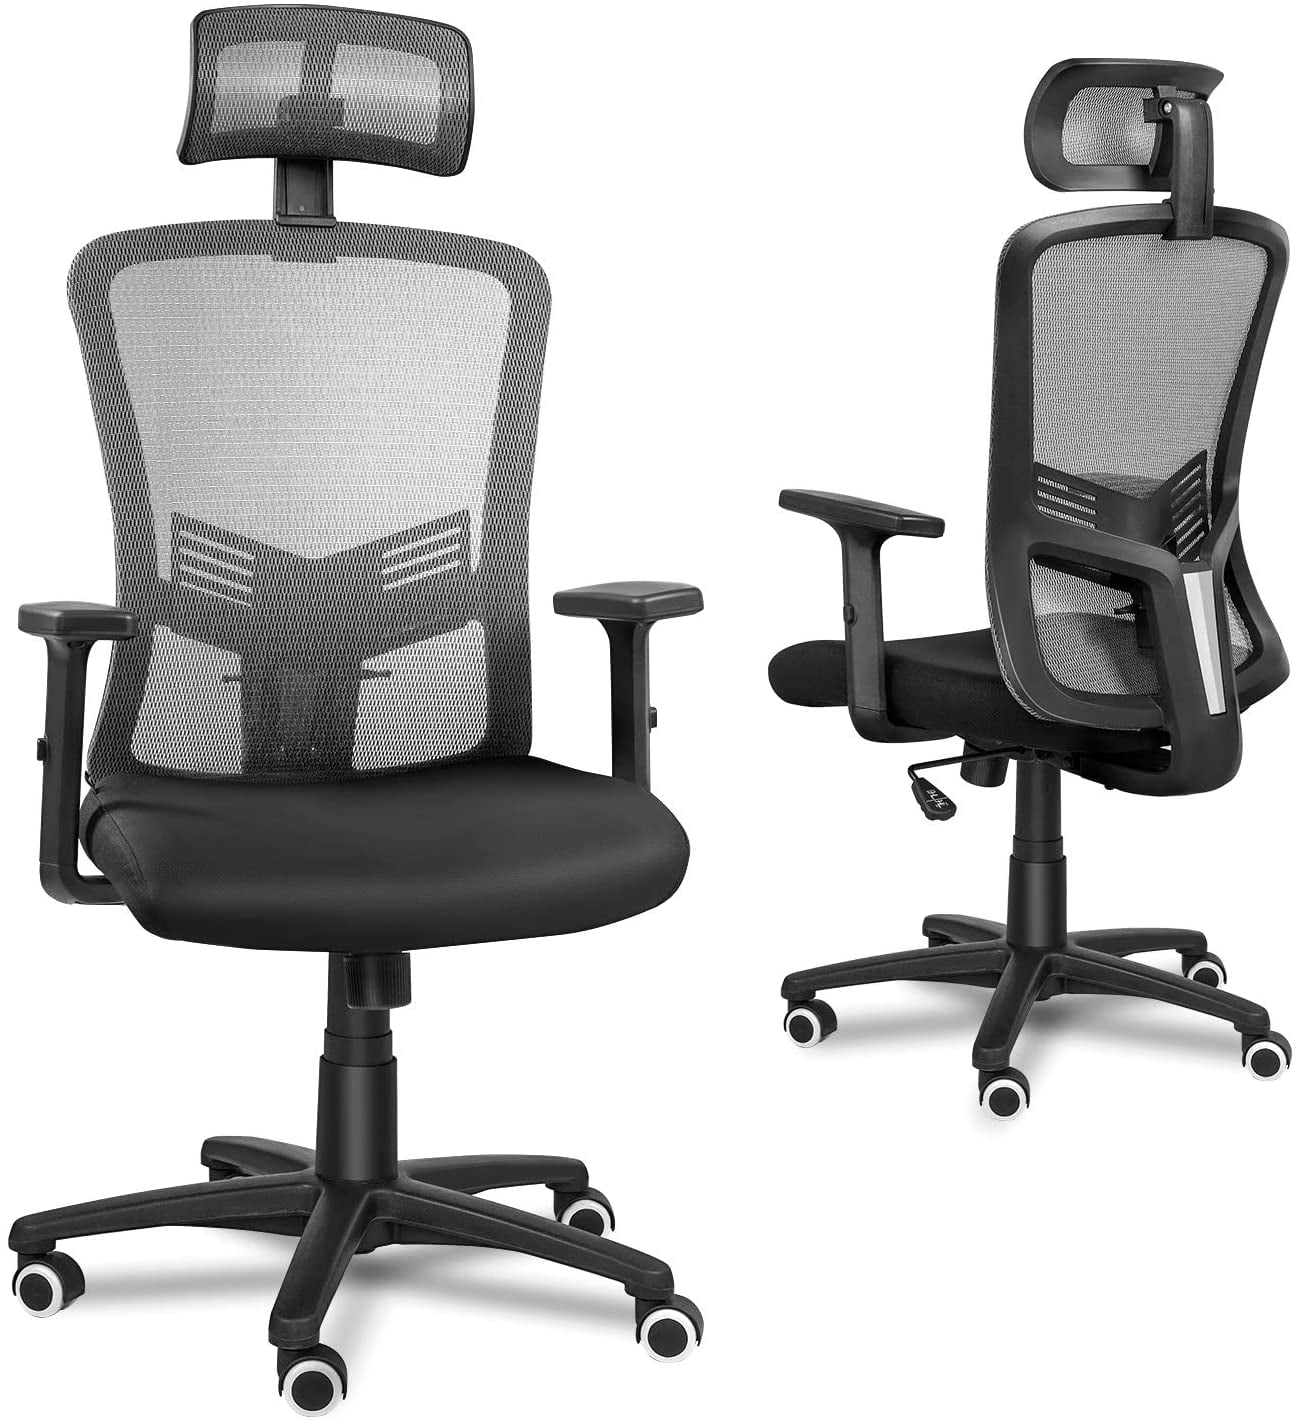 ELECWISH Ergonomic Mesh Office Chair